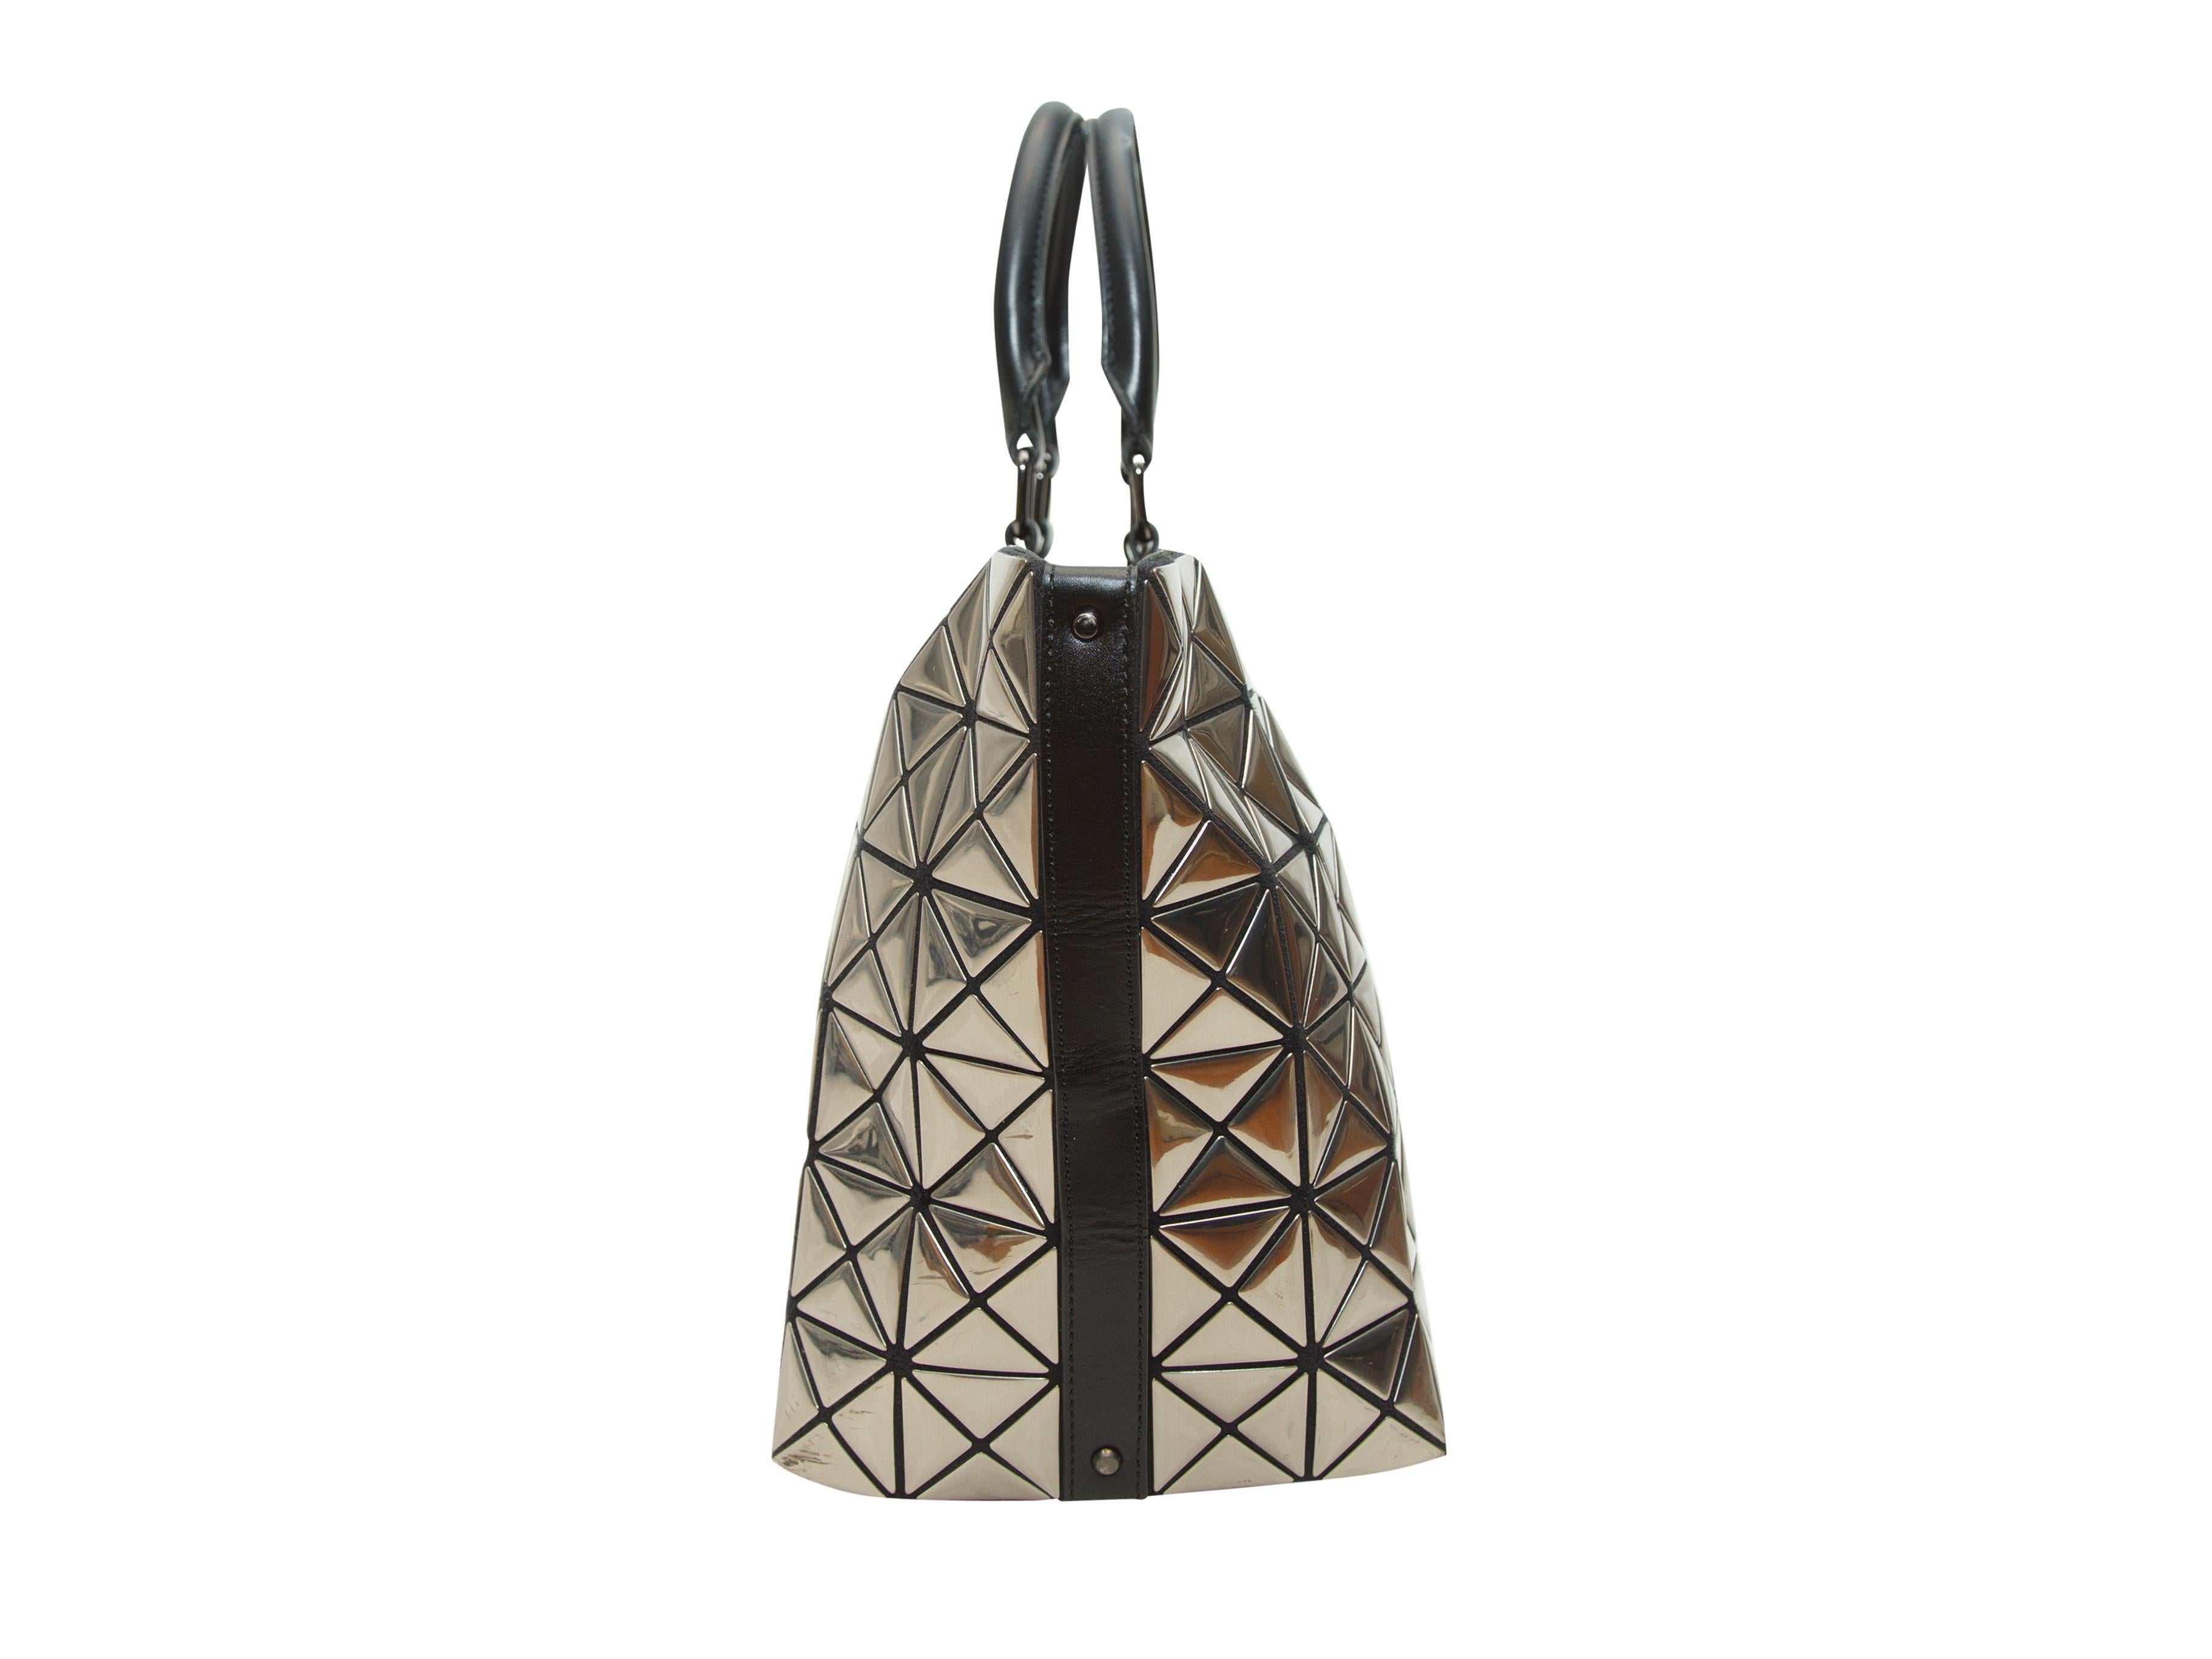 Product details: Silver metallic Bao Bao bag by Issey Miyake. Black trim. Dual top handles. 17